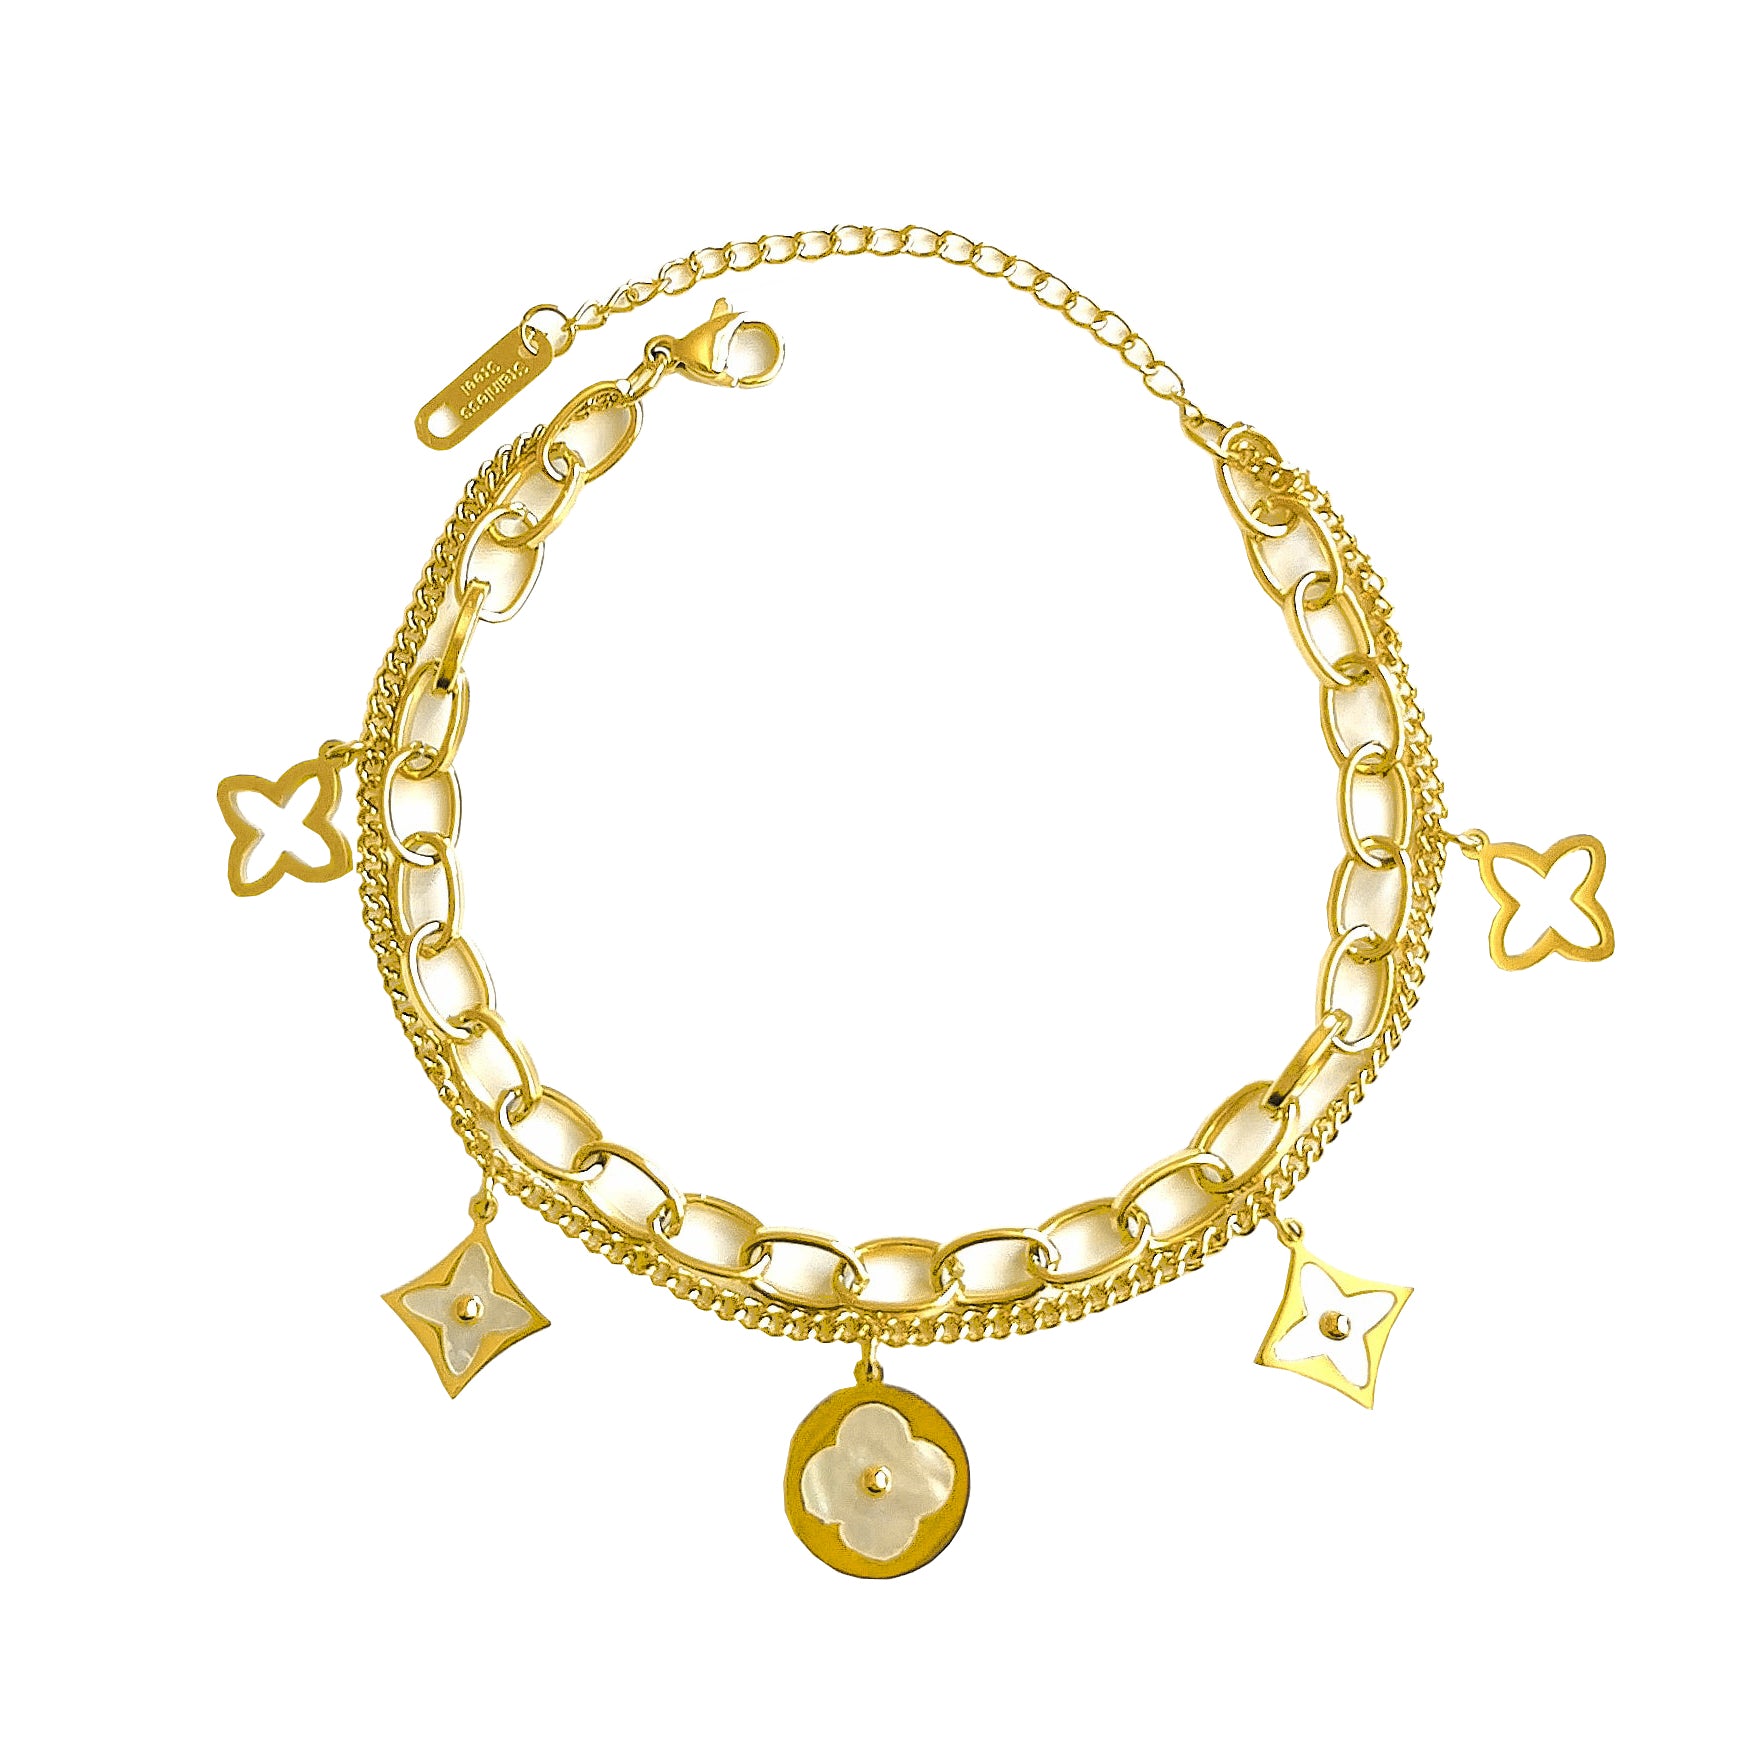 Round Square Flower Clover 18K Gold Stainless Steel Dual Chain Bracelet For Women